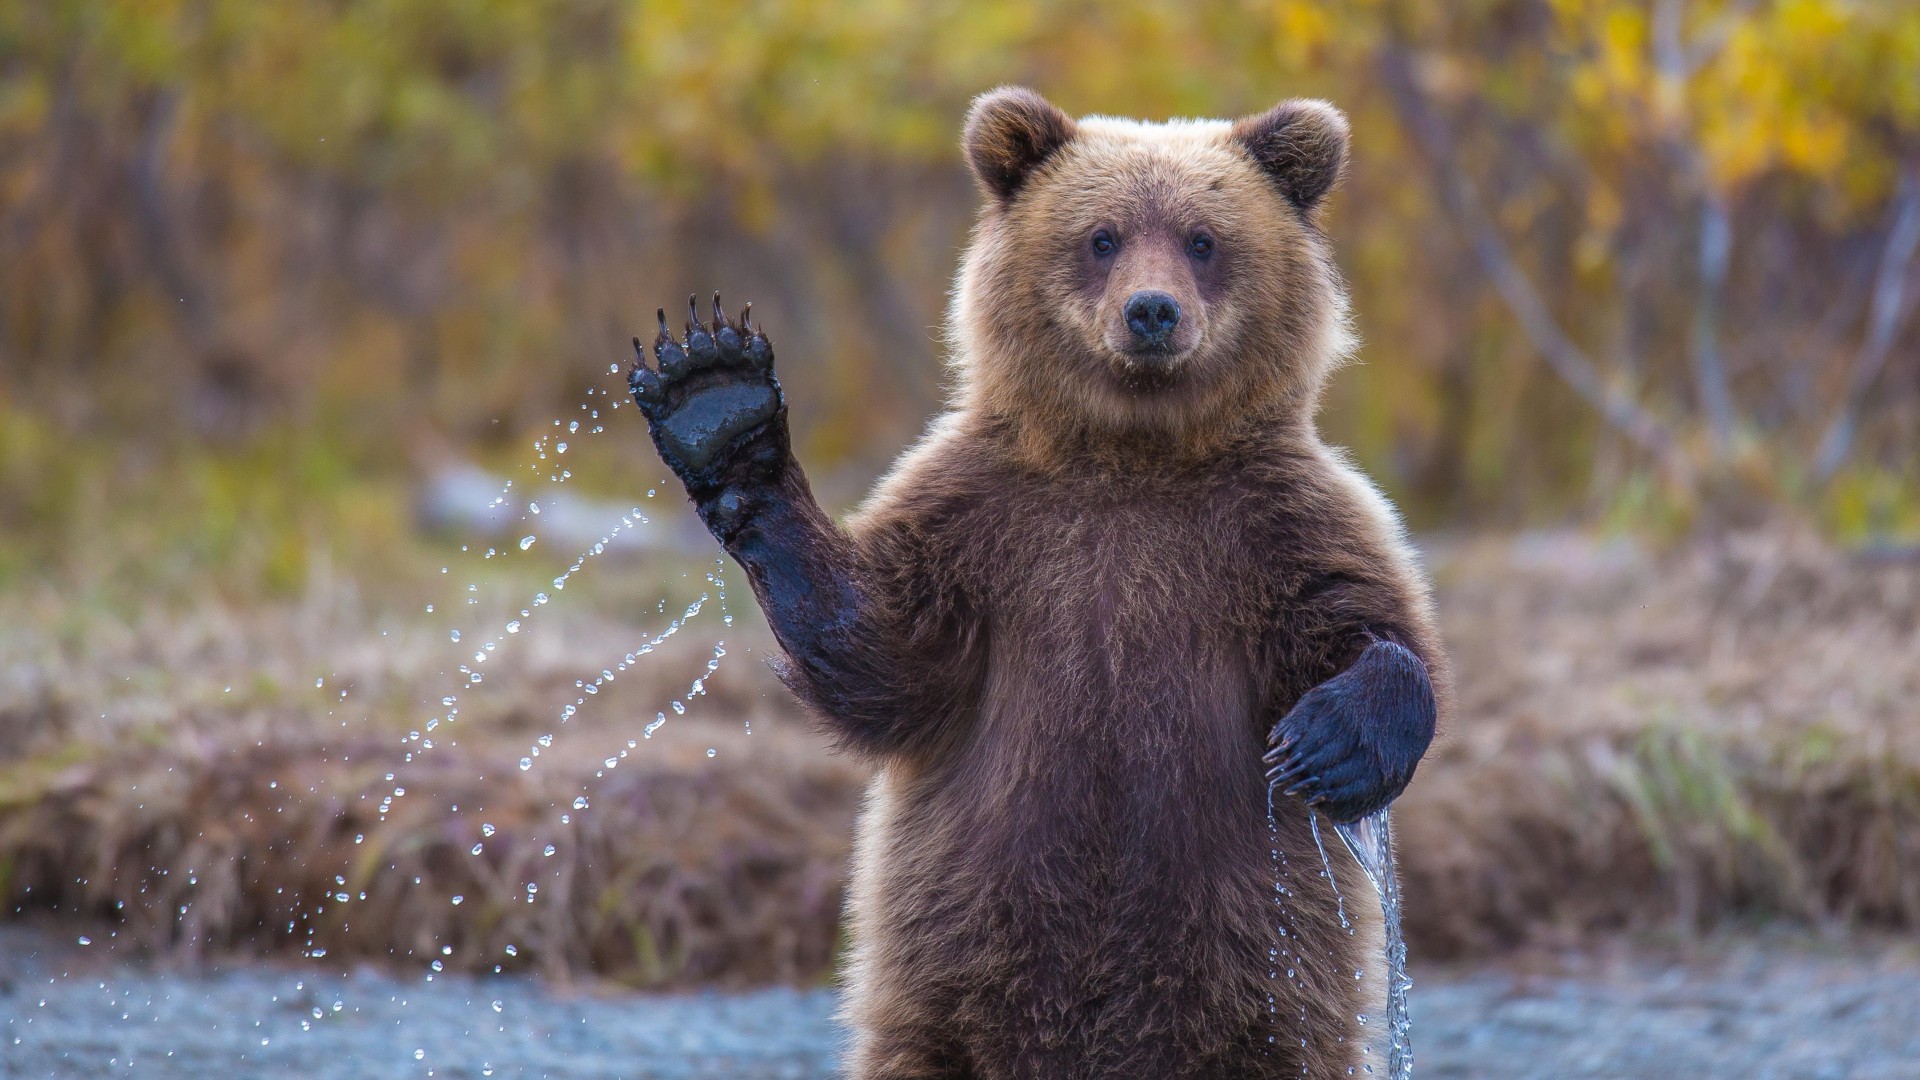 медведь, 4k, HD, привет, смешные, National Geographic, река, Bear, 4k, HD wallpaper, Hi, Water, National Geographic, Big (horizontal)